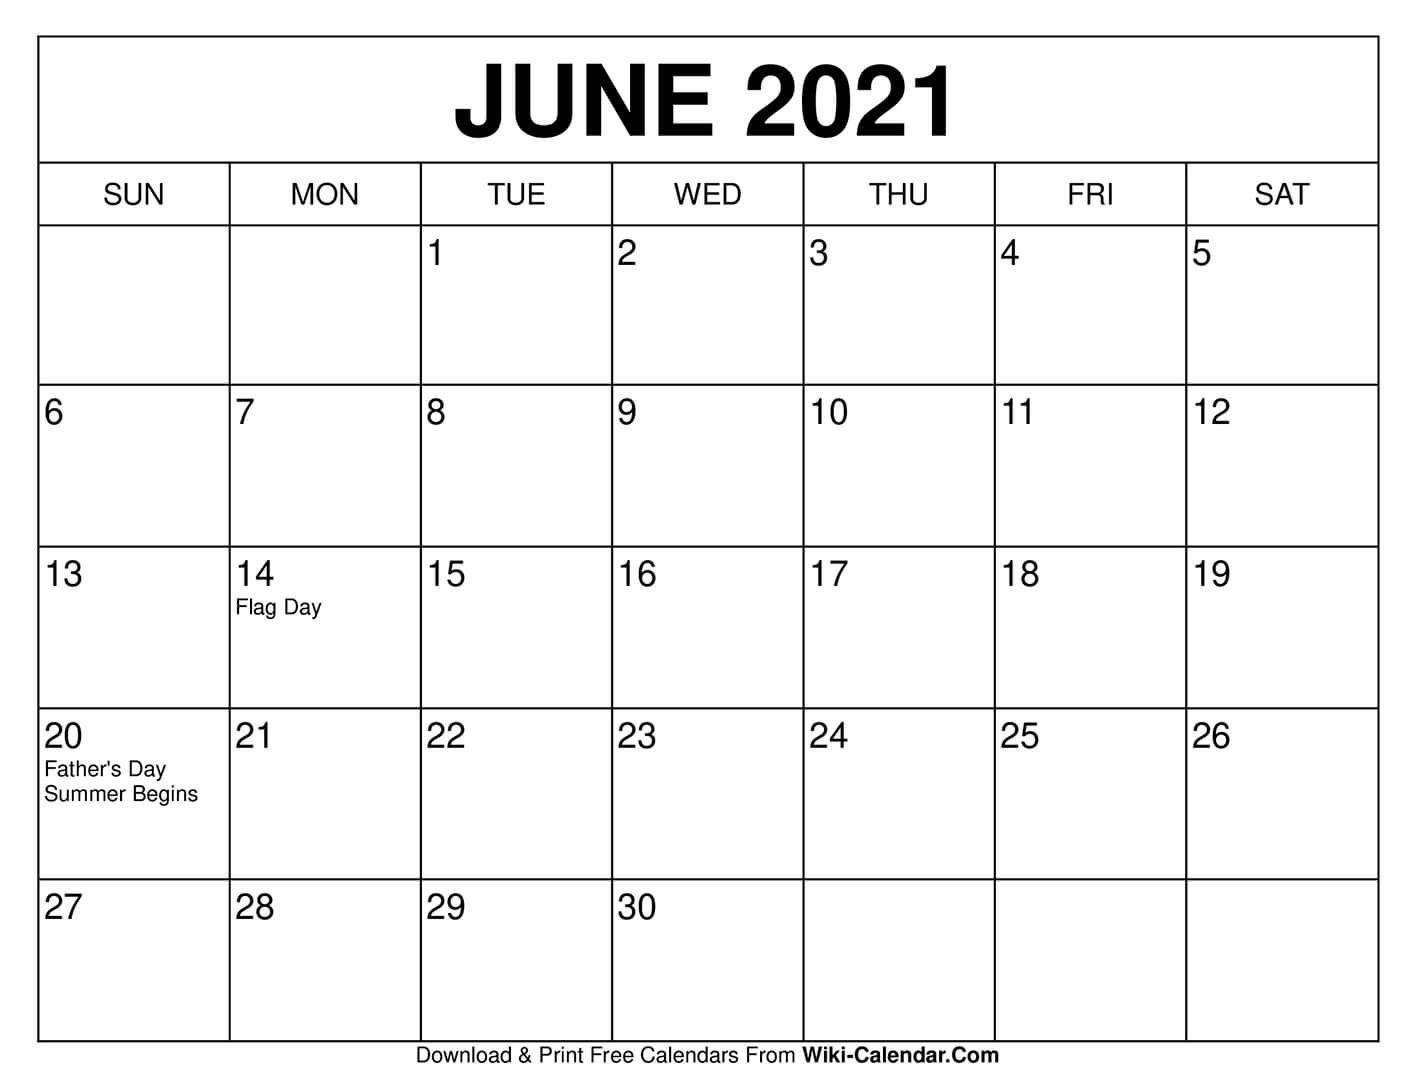 June 2021 Calendar In 2020 | Calendar Printables Calendar